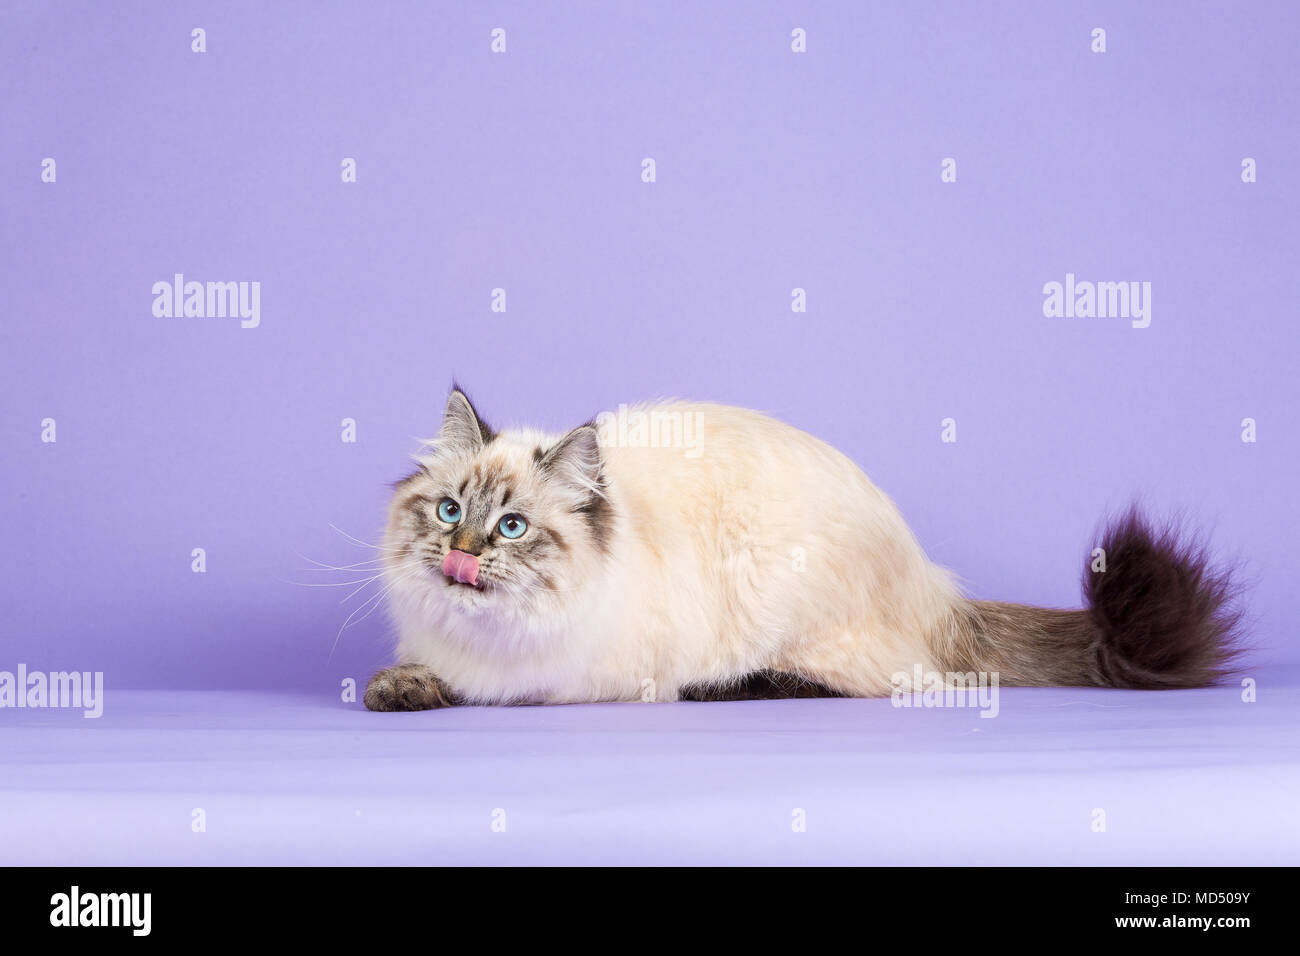 Amazing Siberian cat on purple Stock Photo